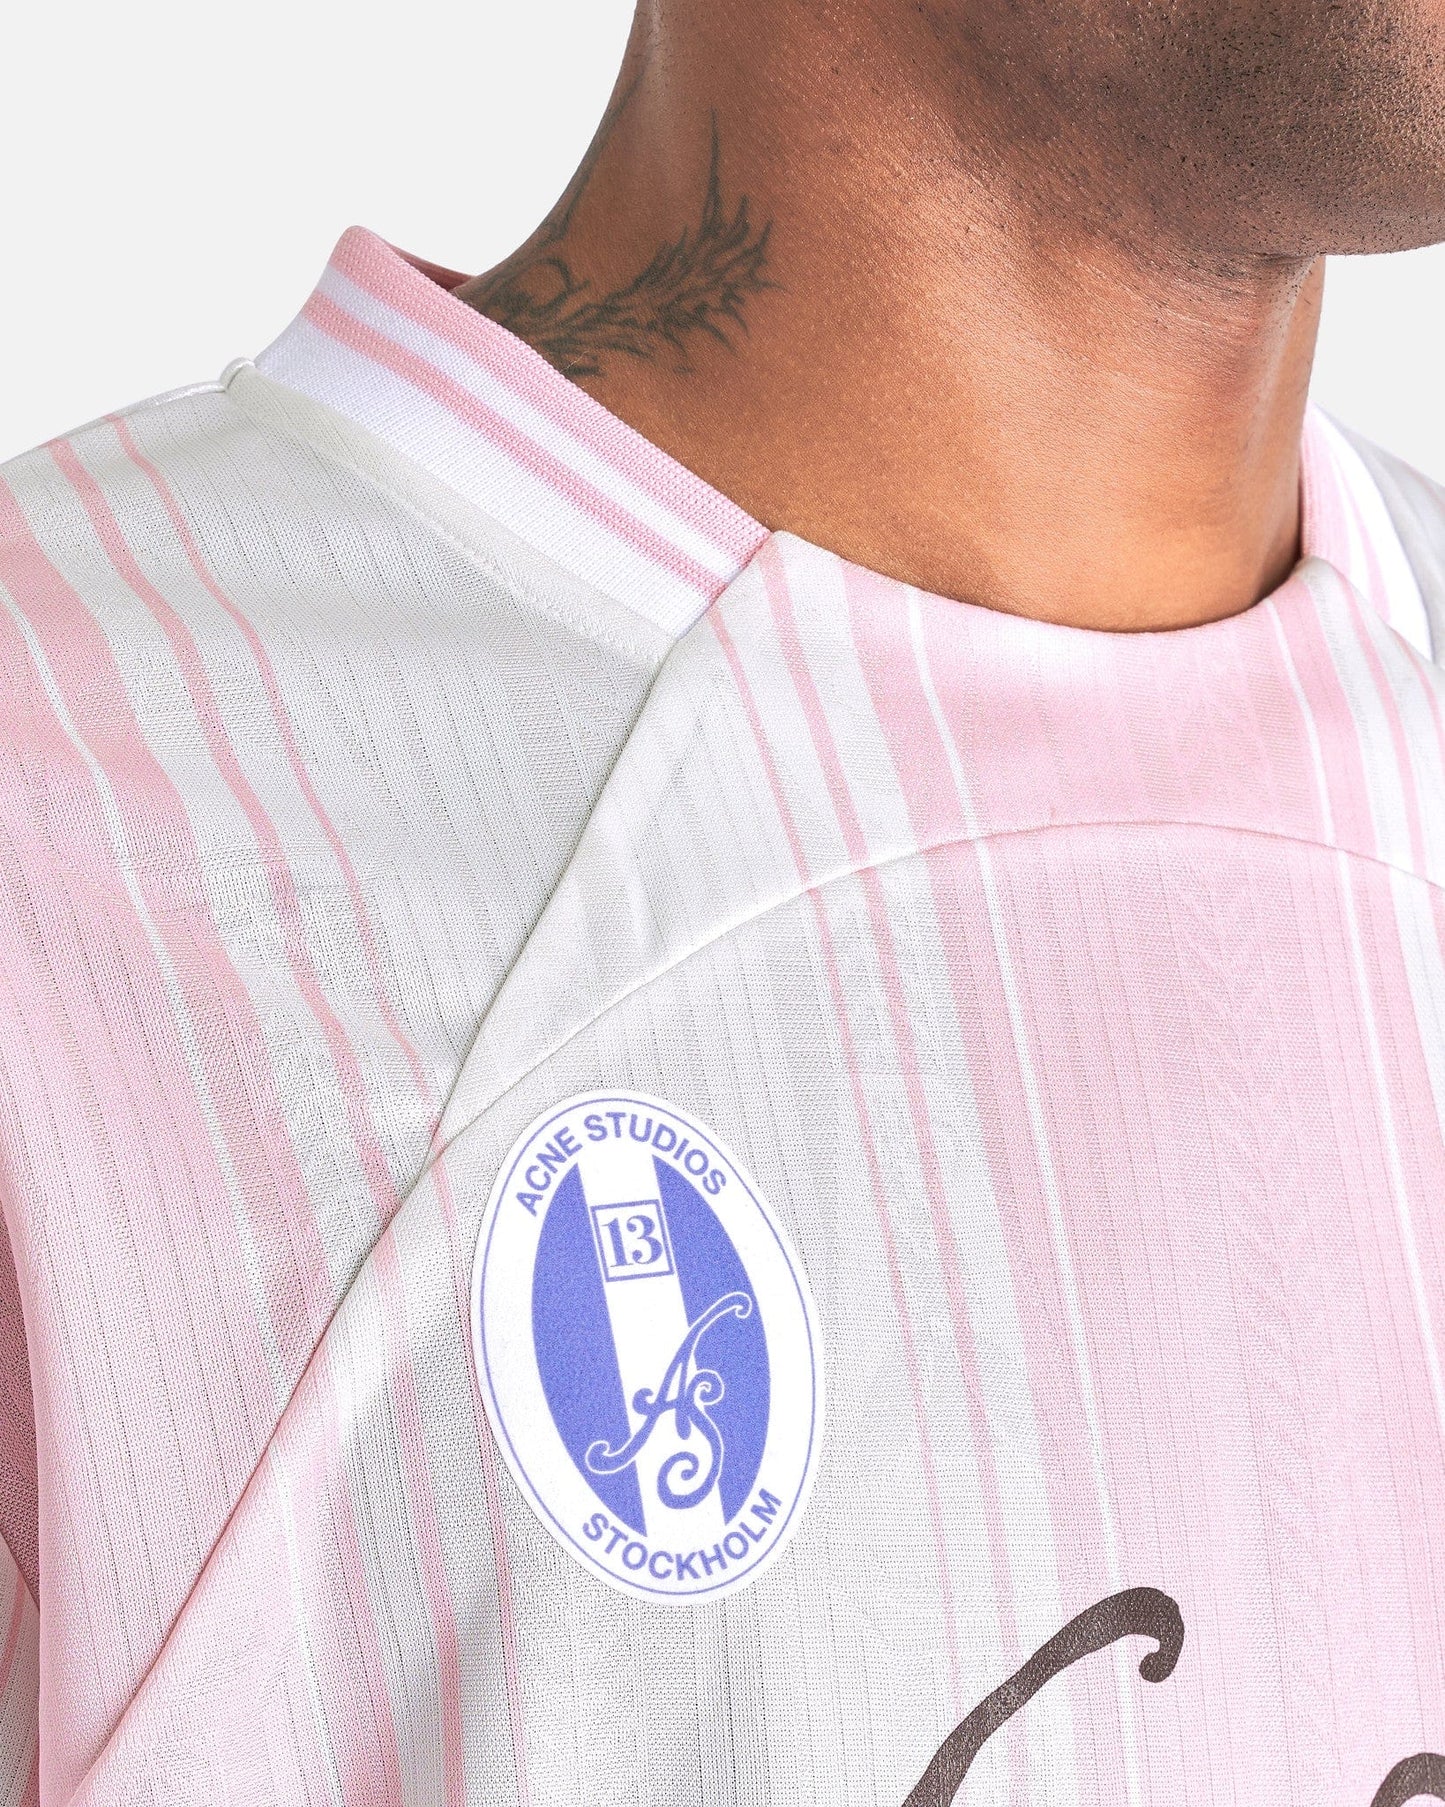 Acne Studios Men's T-Shirts Logo Print Jersey T-Shirt in Pink/White